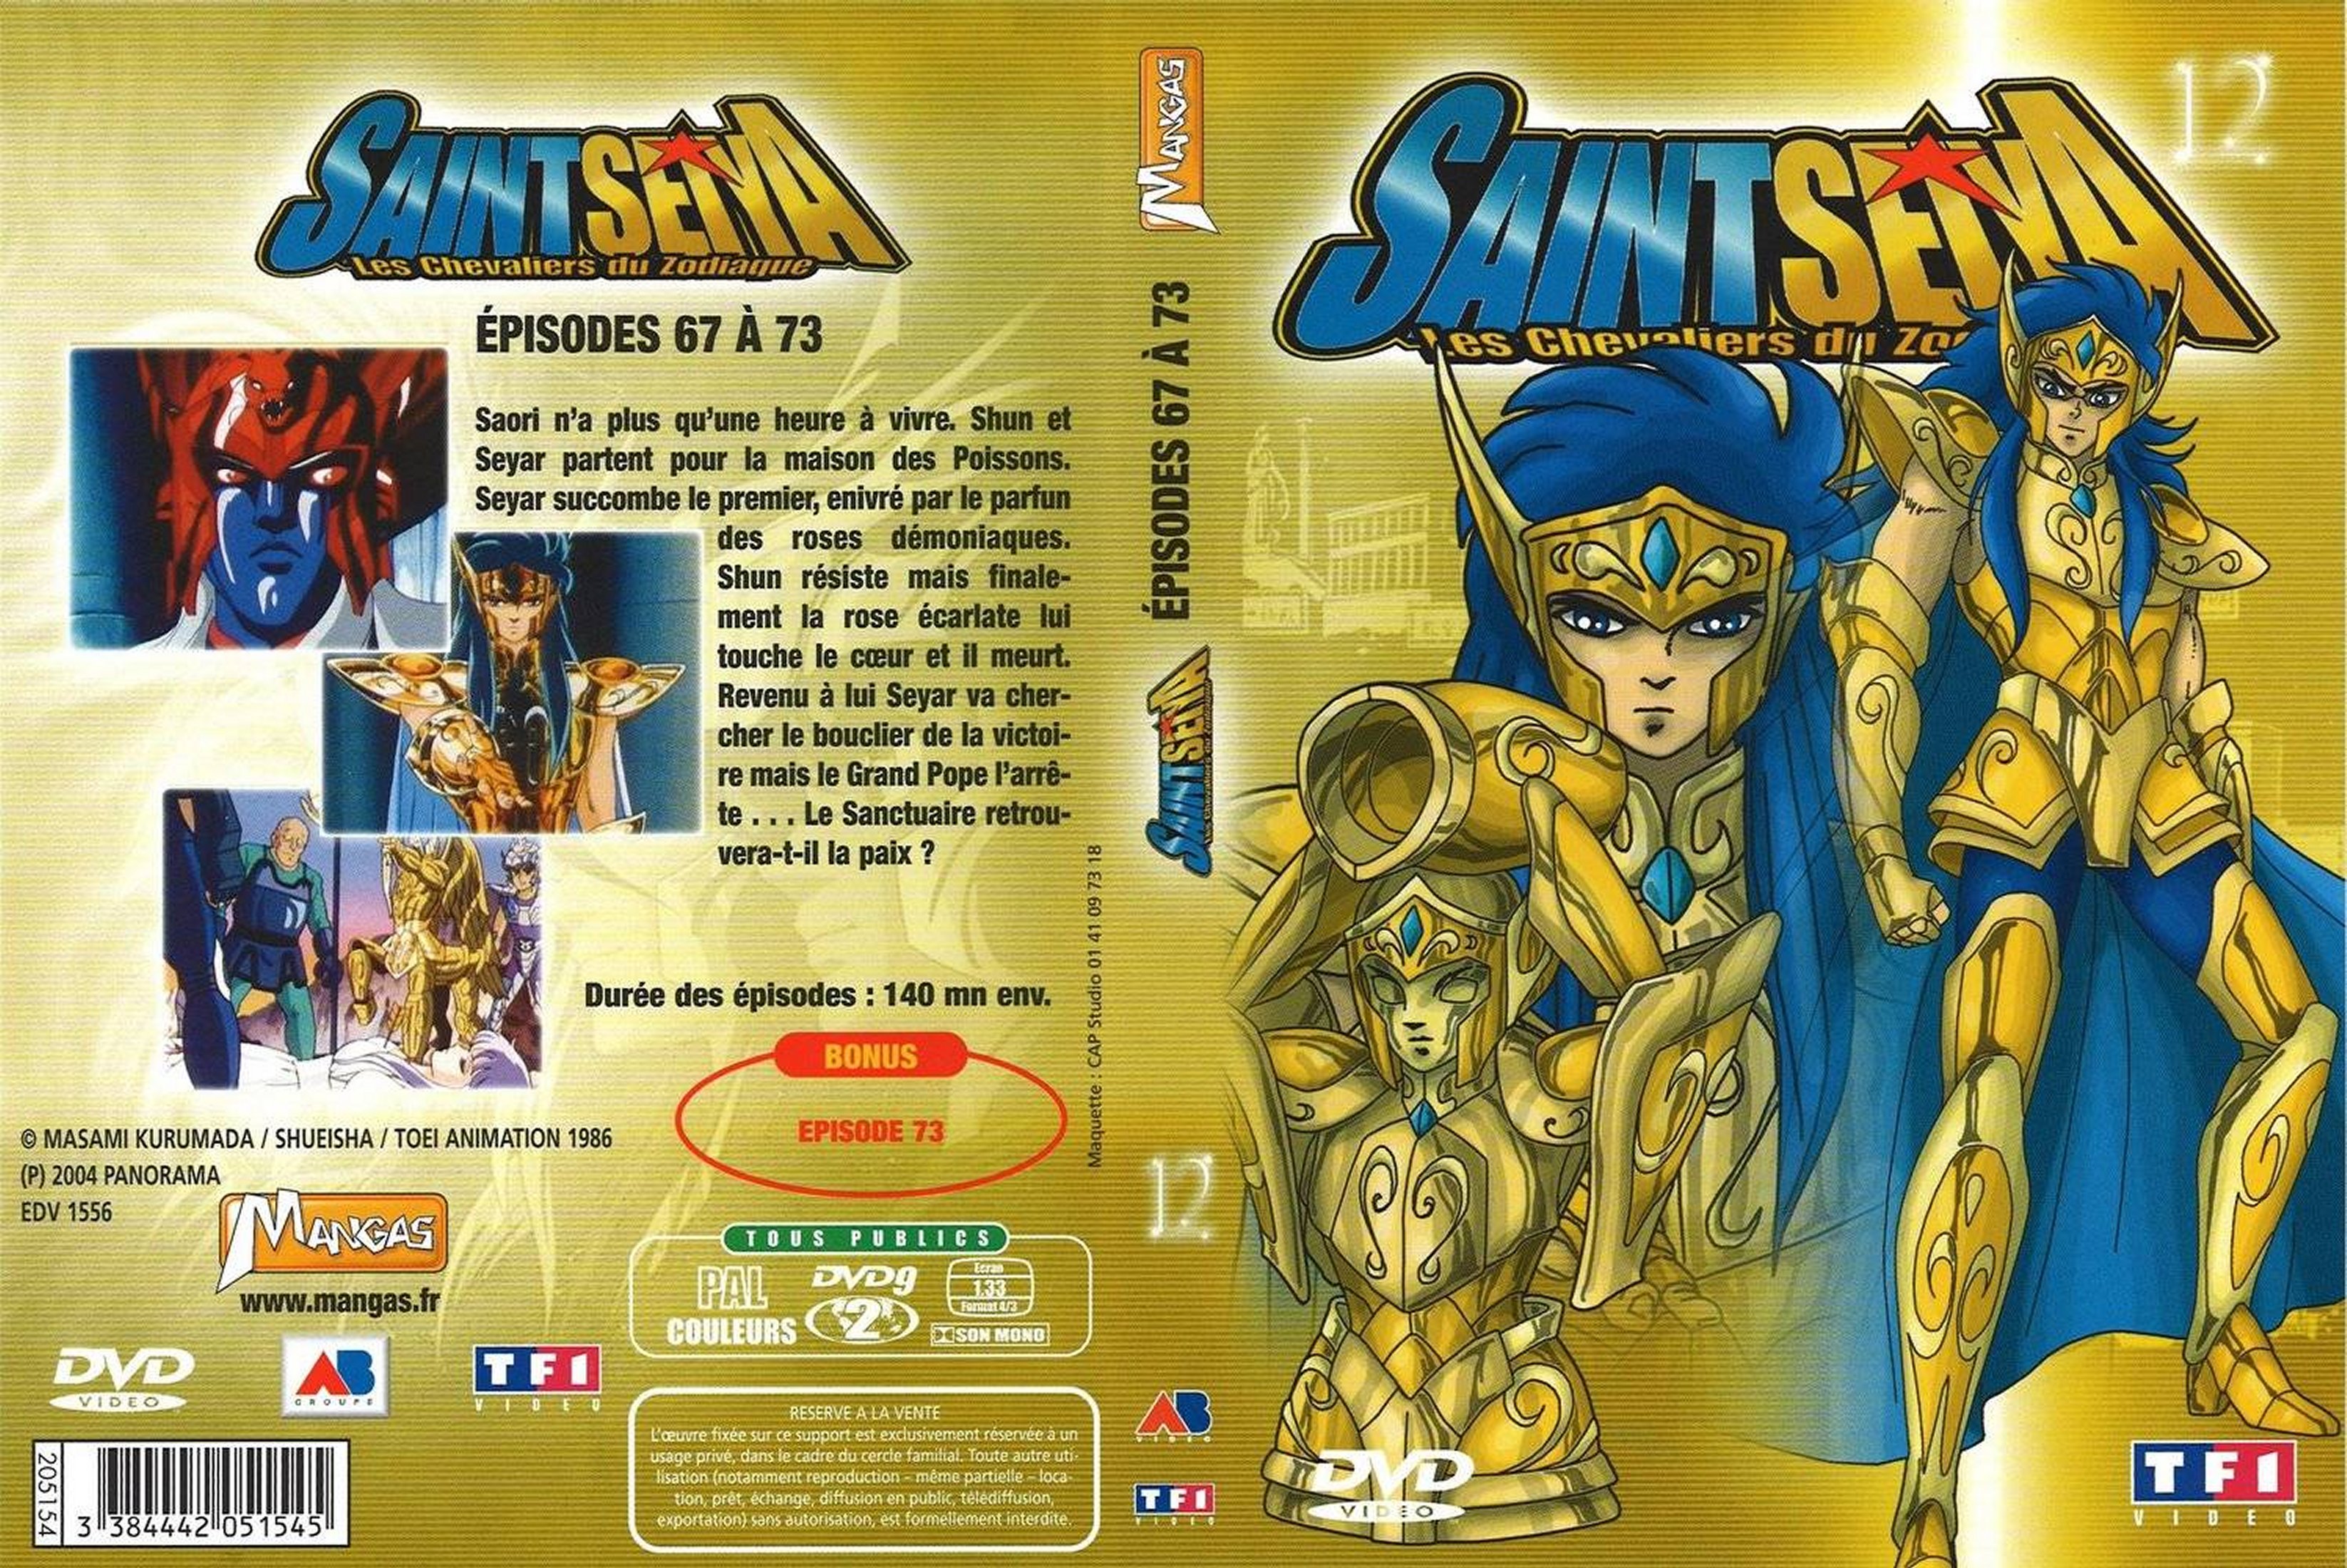 Jaquette DVD Saint Seiya vol 12